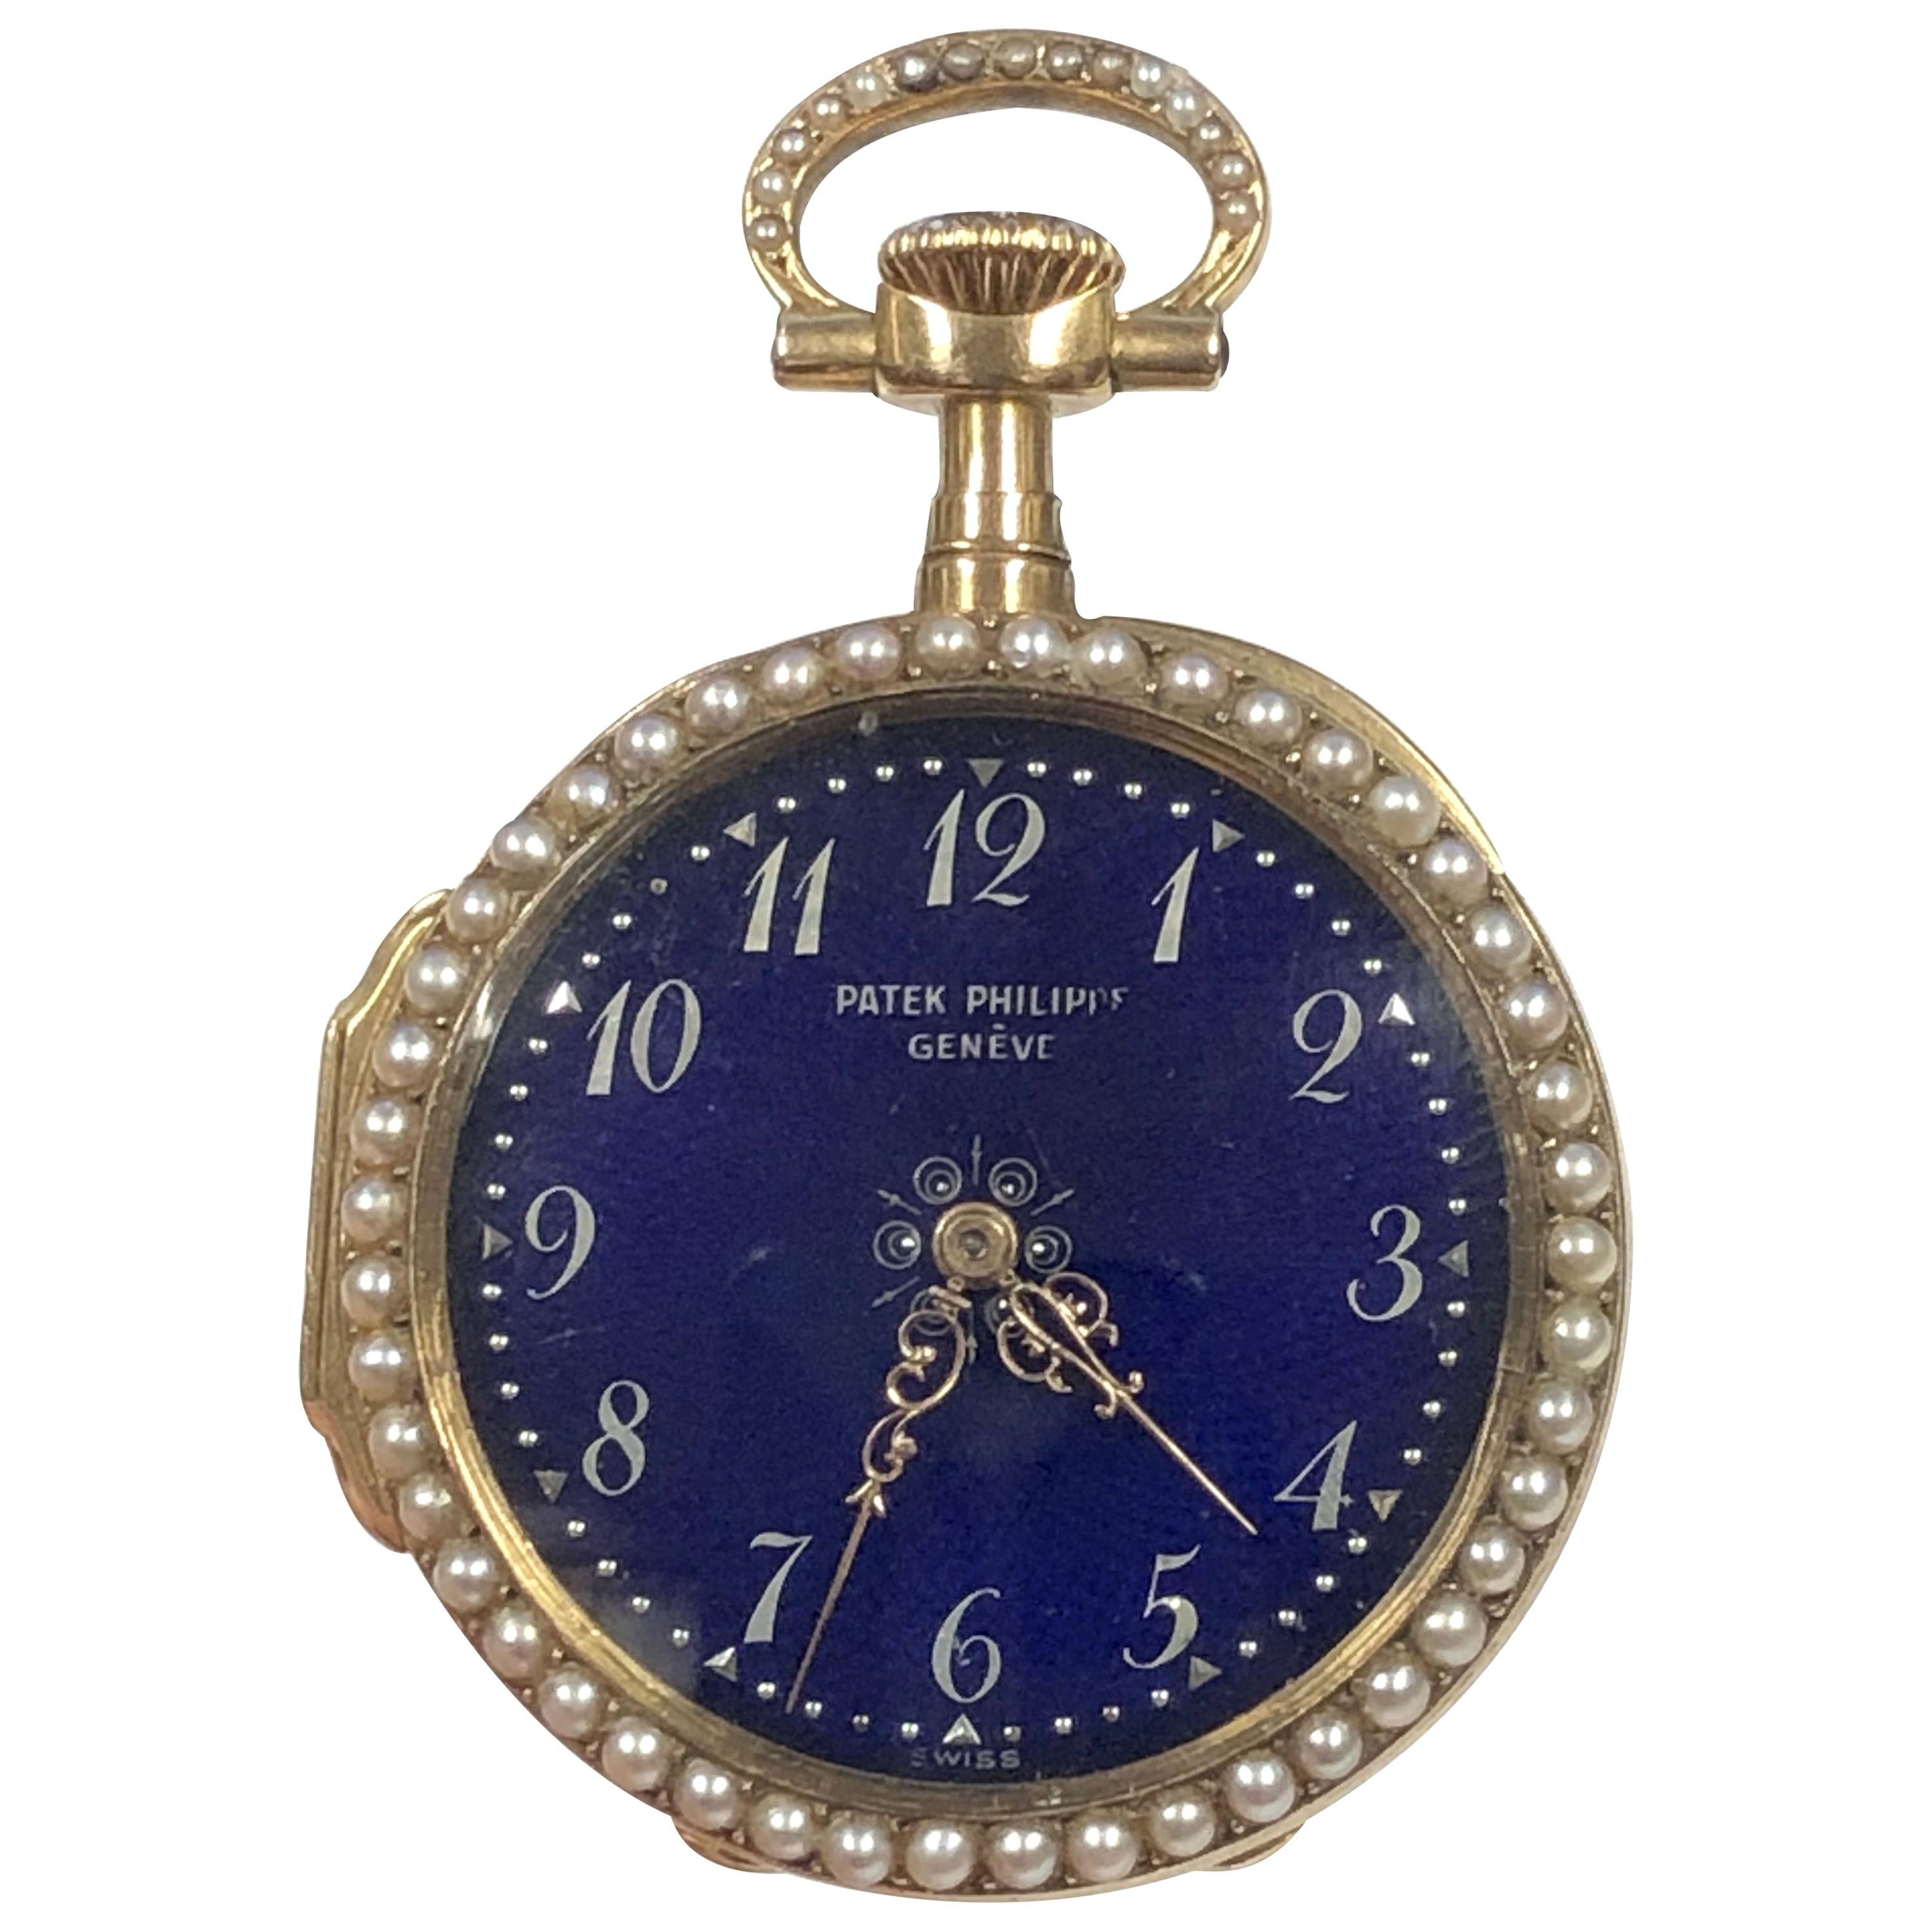 Patek Philippe 1893 Gold Enamel and Pearl Presentation Pendant Watch